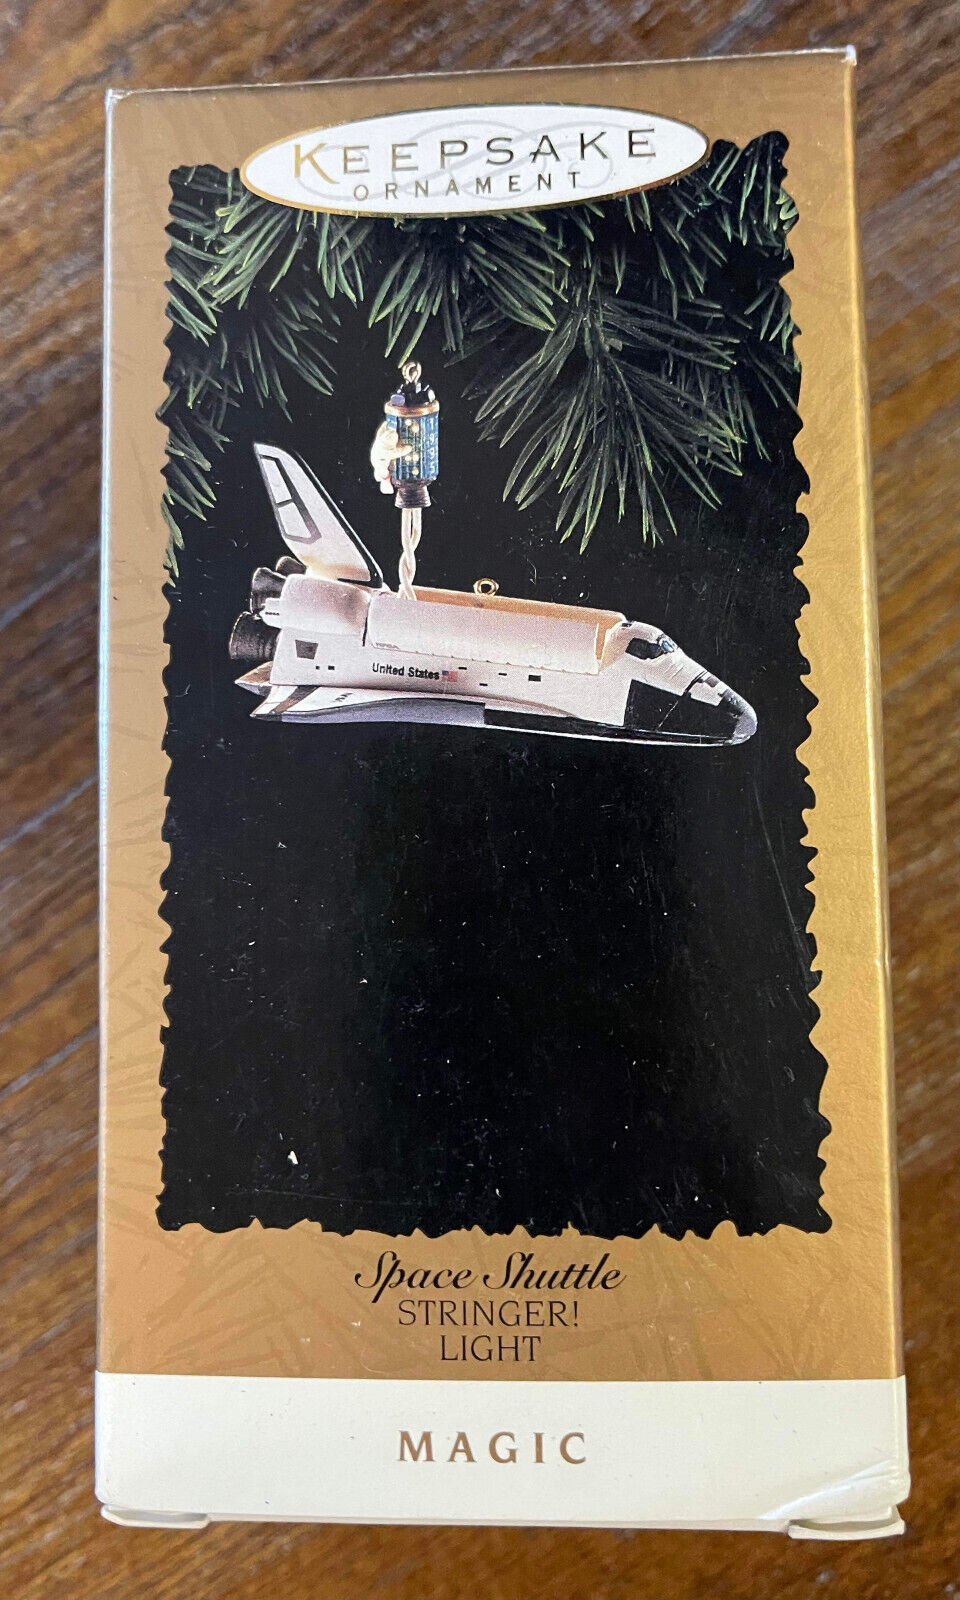 Hallmark 1995 NASA "Space Shuttle Stringer" magic ornament